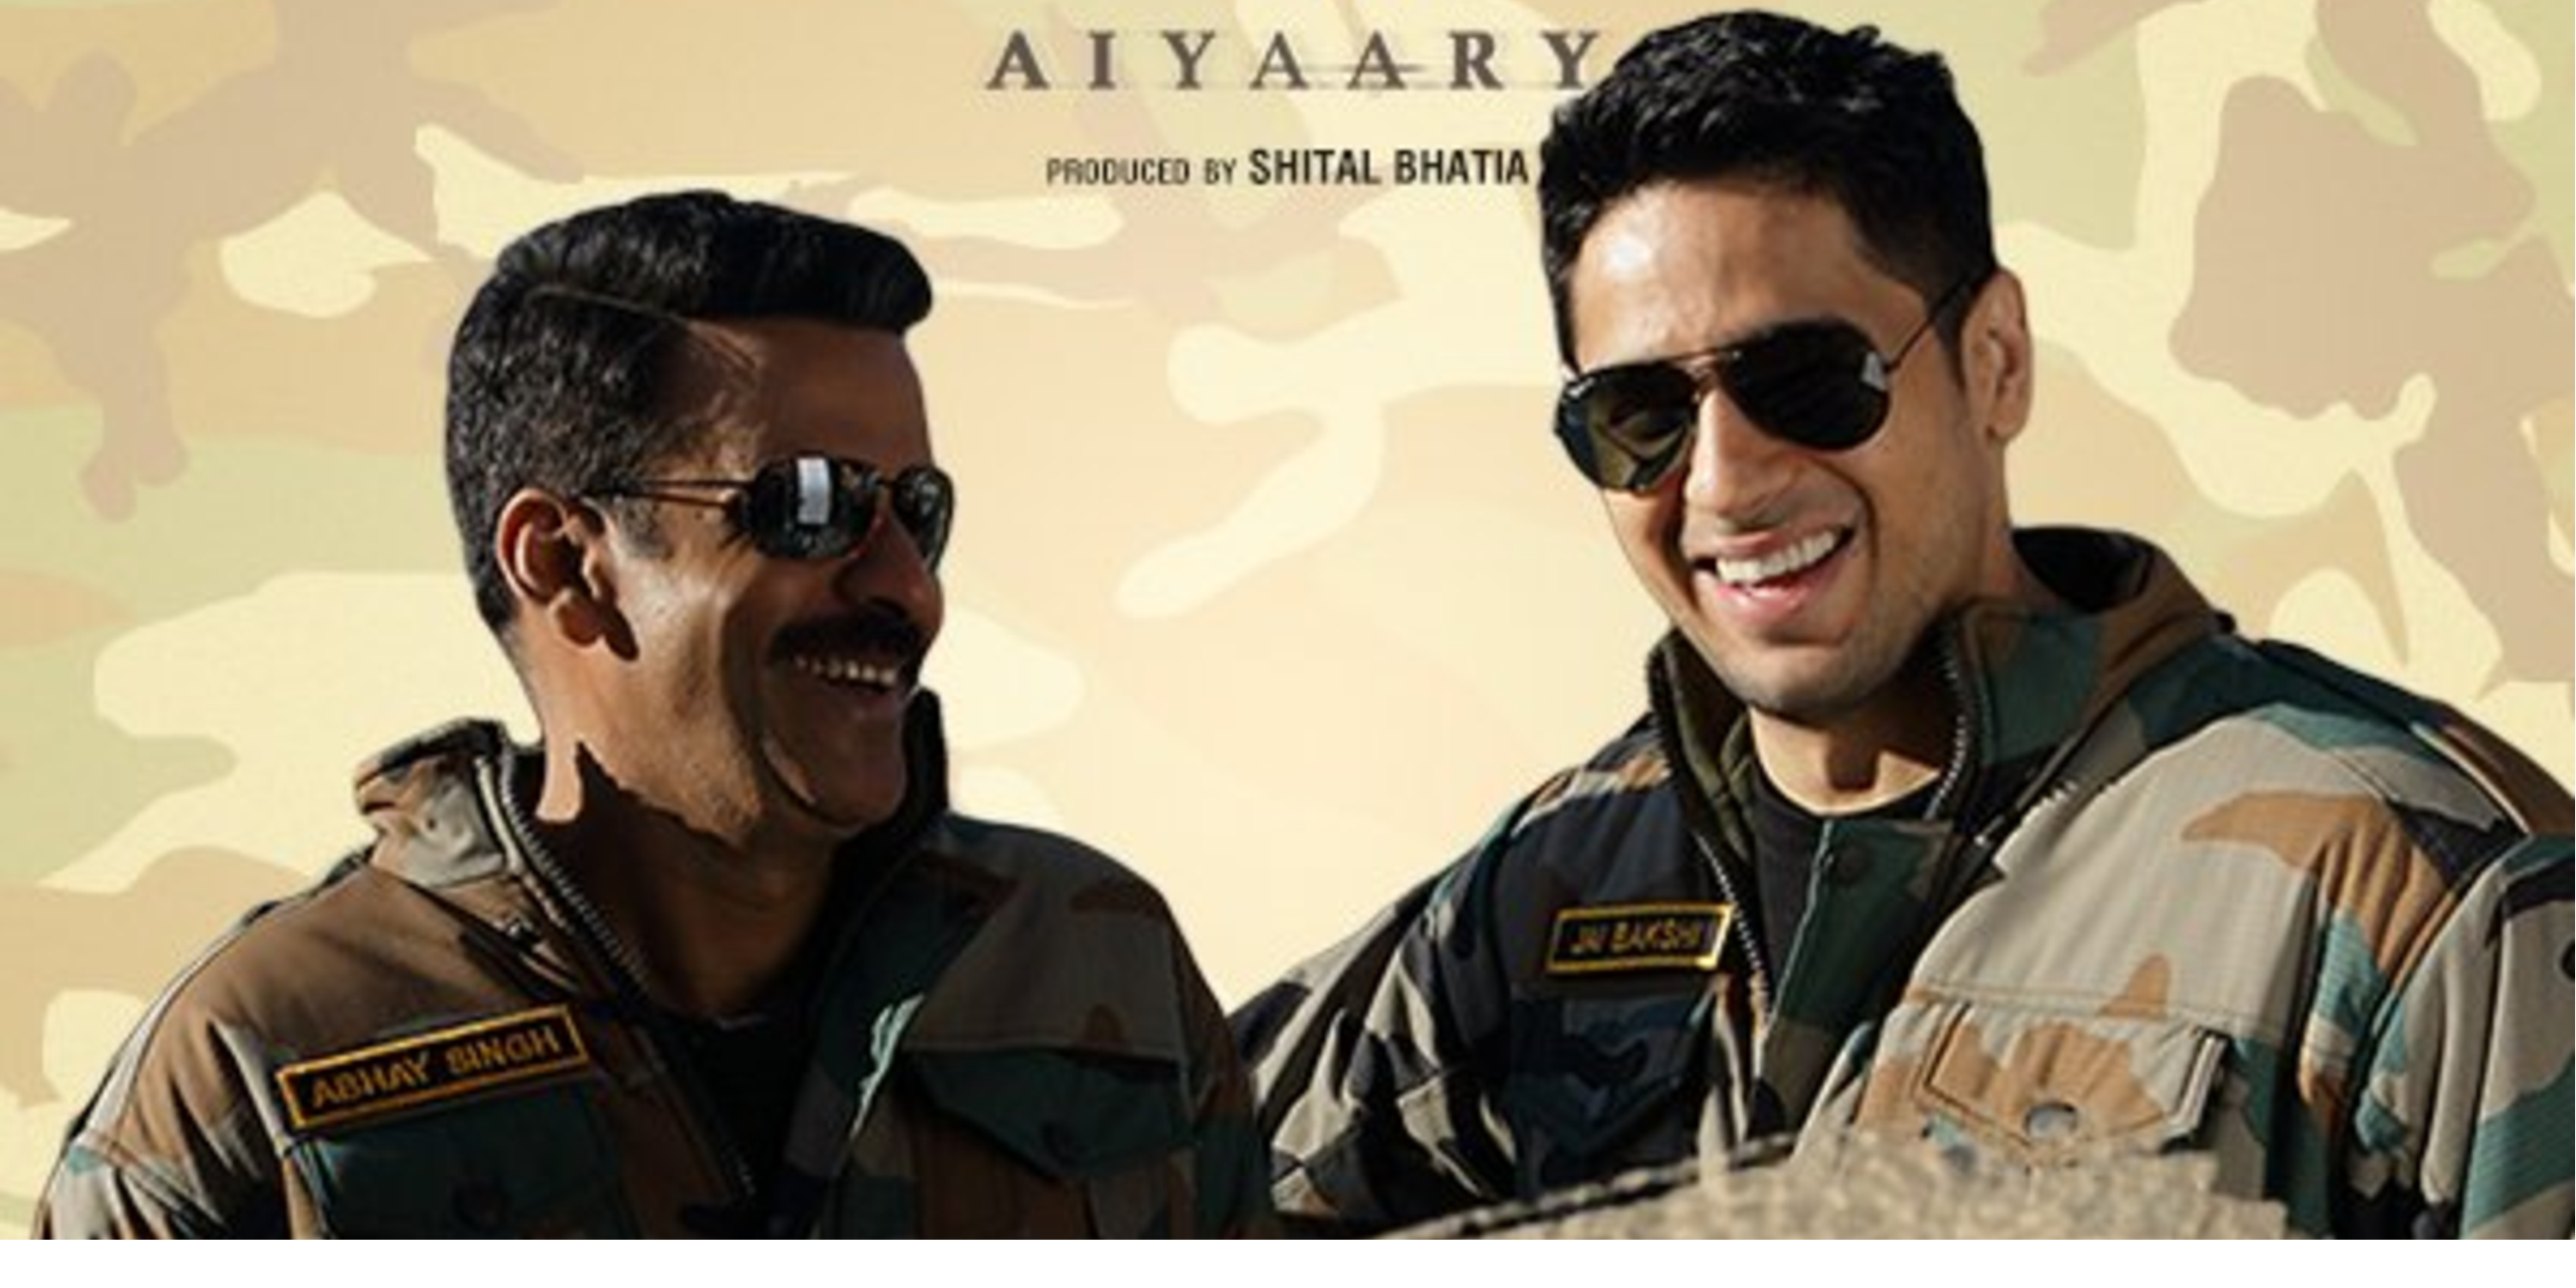 Aiyaary film dailouges 